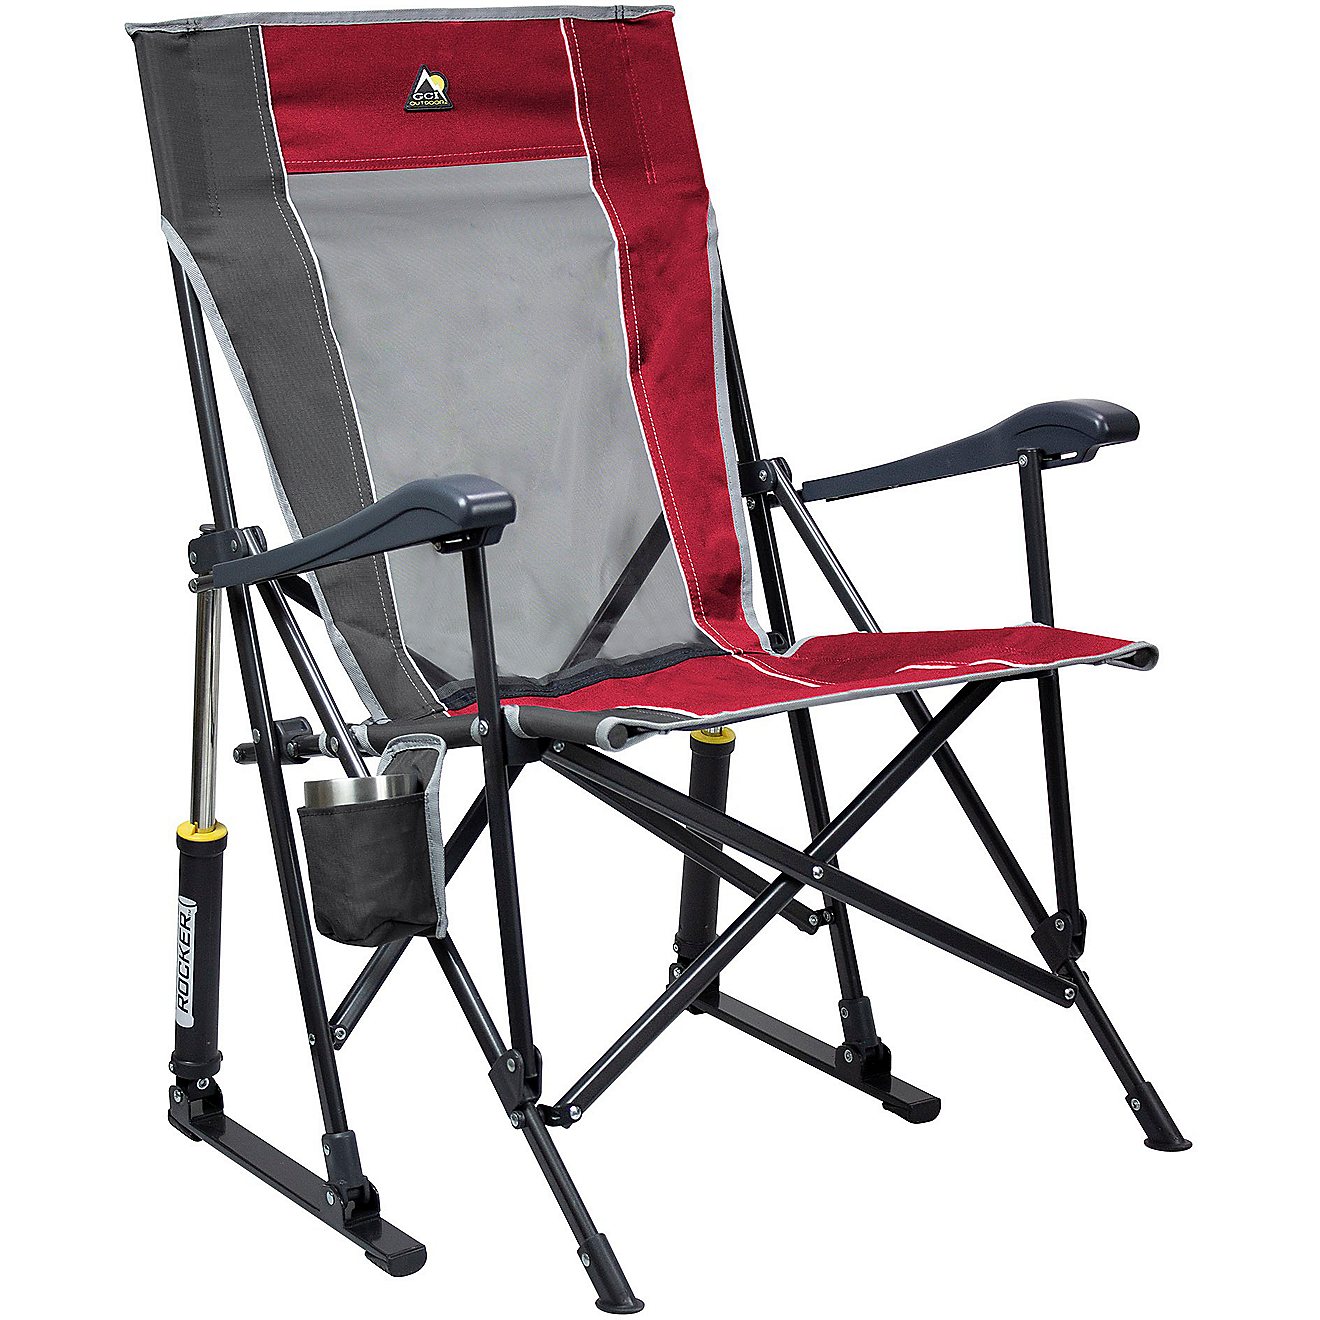 Gci Outdoor Roadtrip Rocker Chair Academy, Outdoor Foldable Rocking Chairs